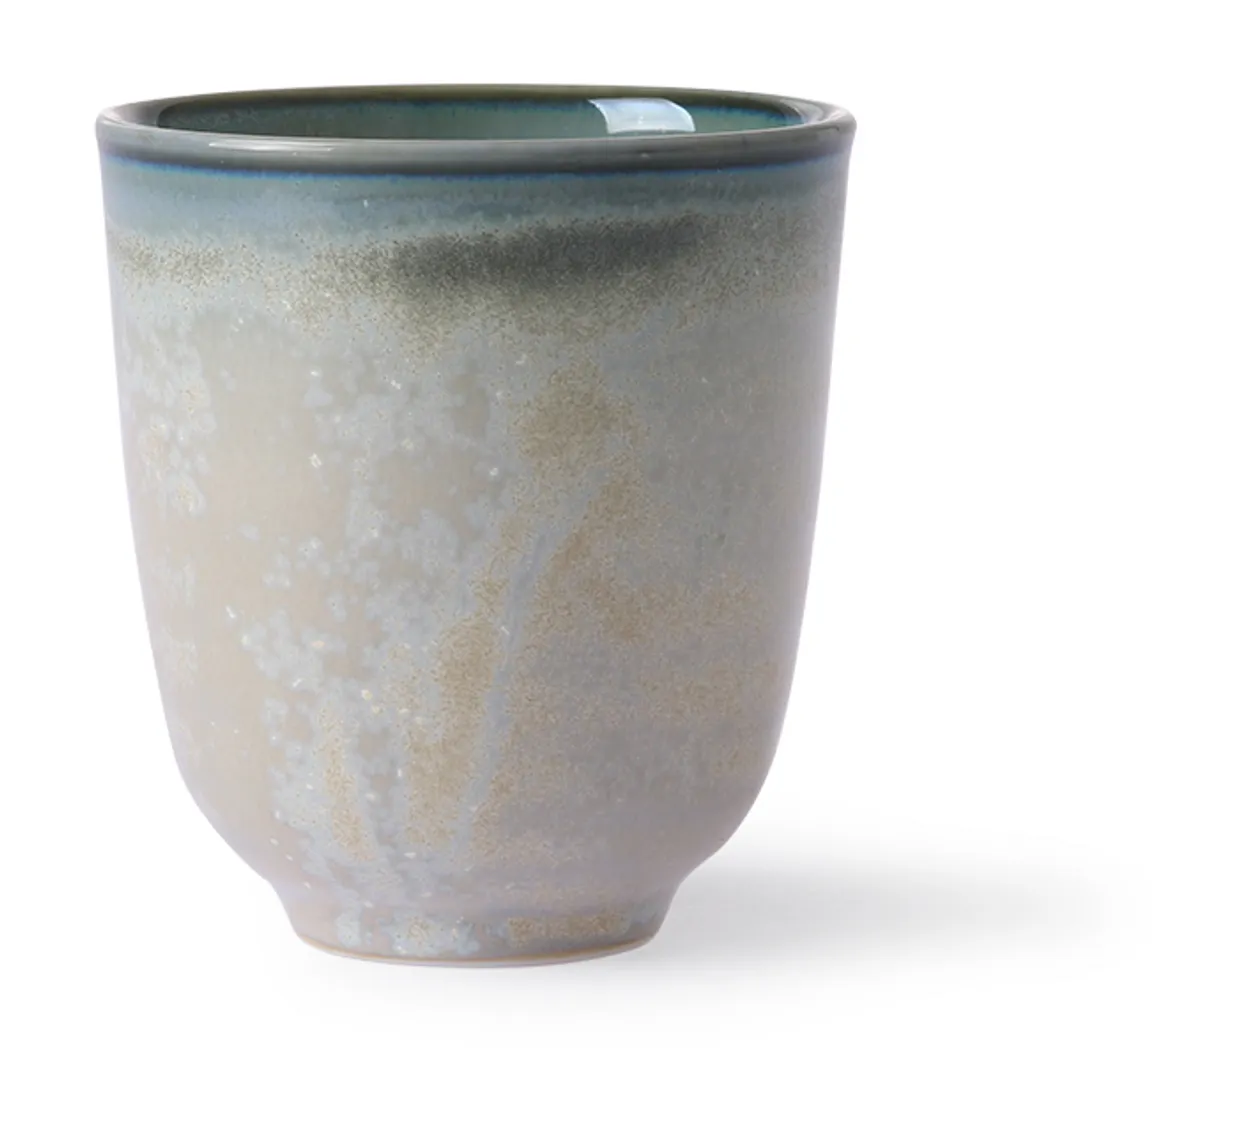 Chef ceramics: mug grey/green